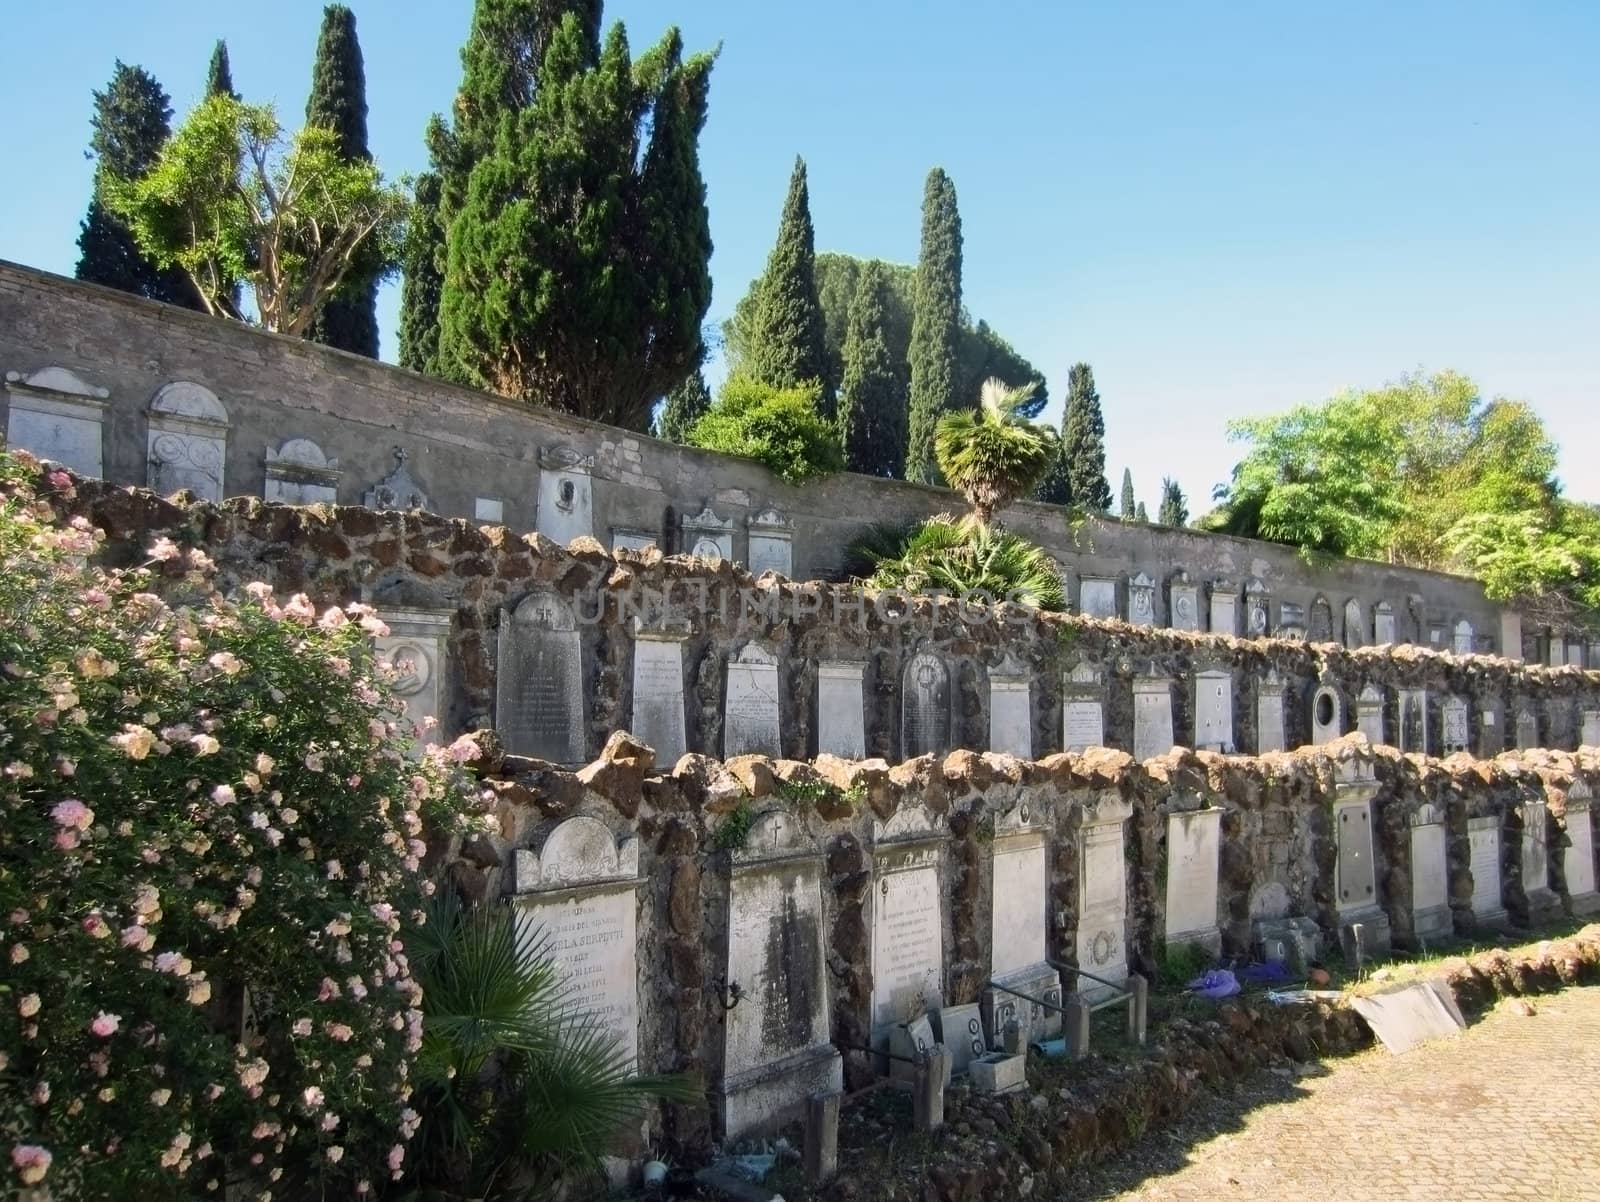 Cemetery in Rome, Italy